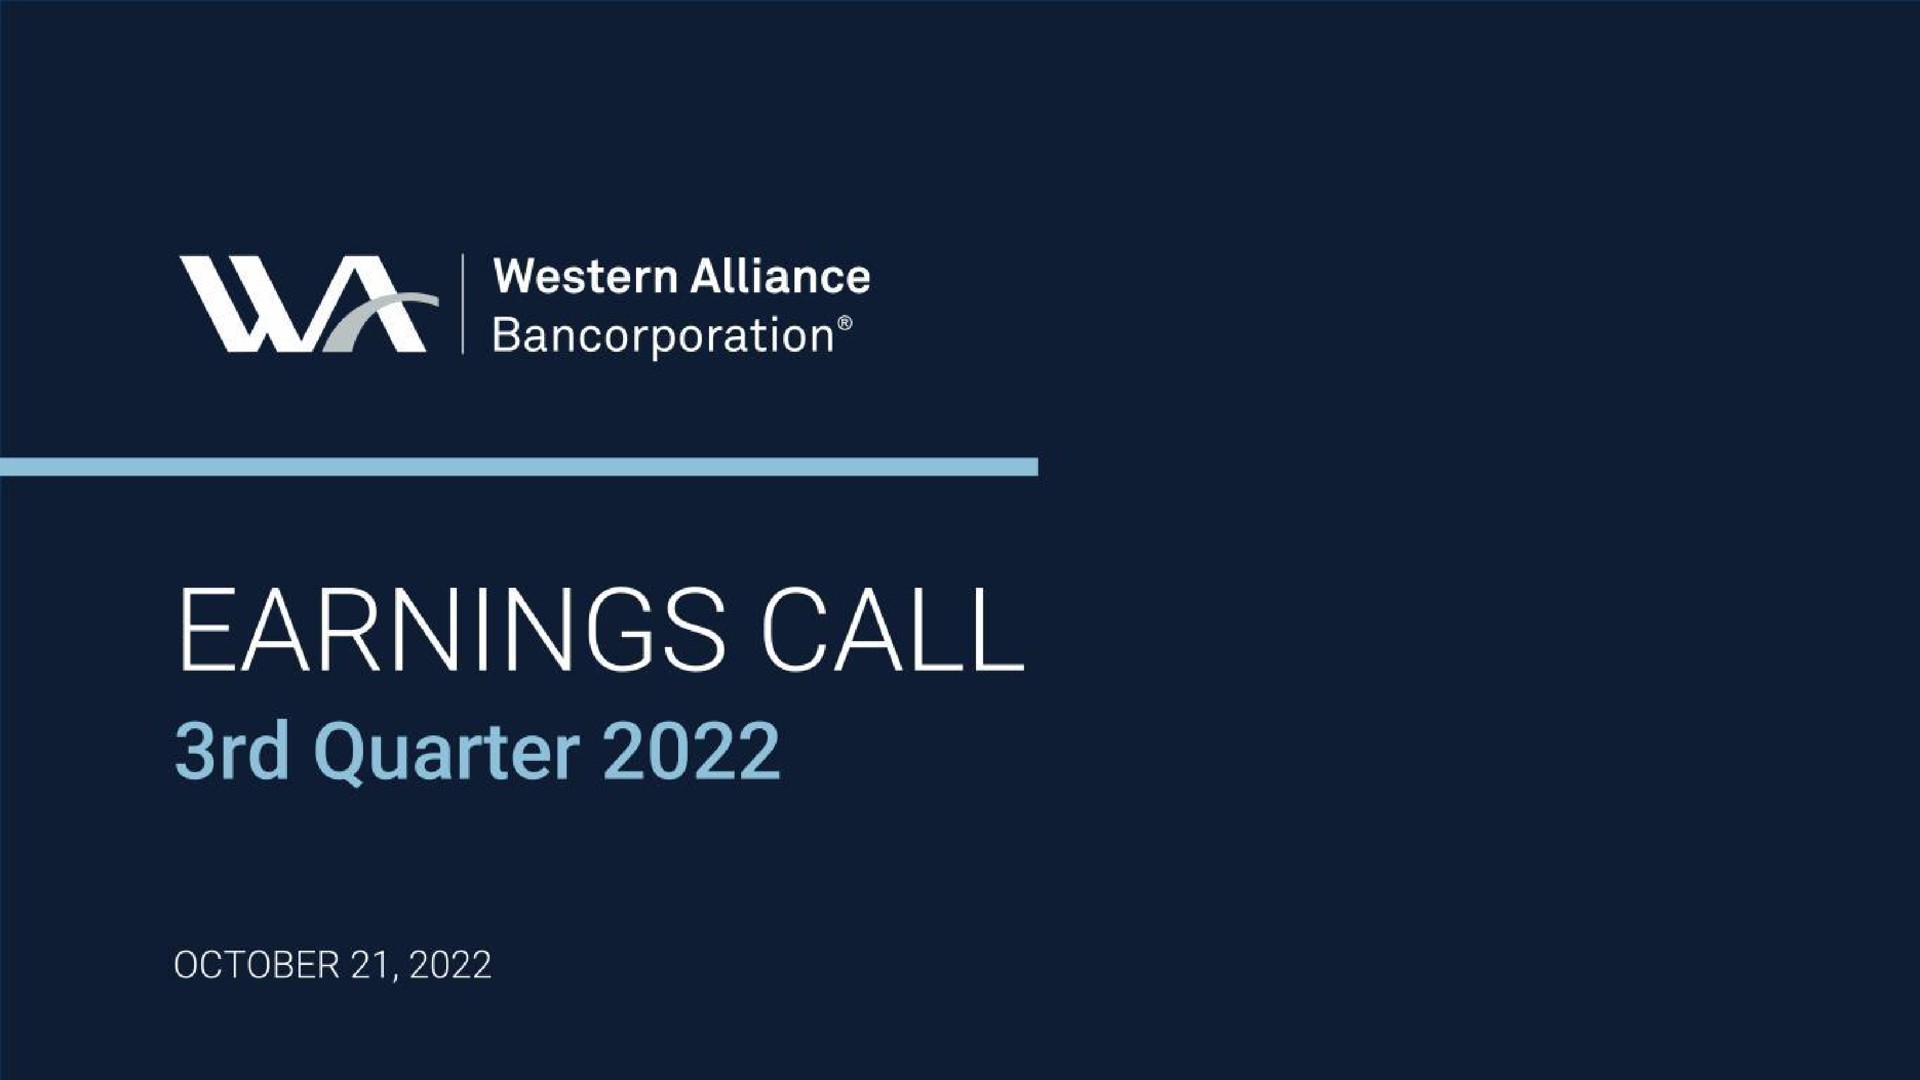 van western alliance earnings call quarter | Western Alliance Bancorporation